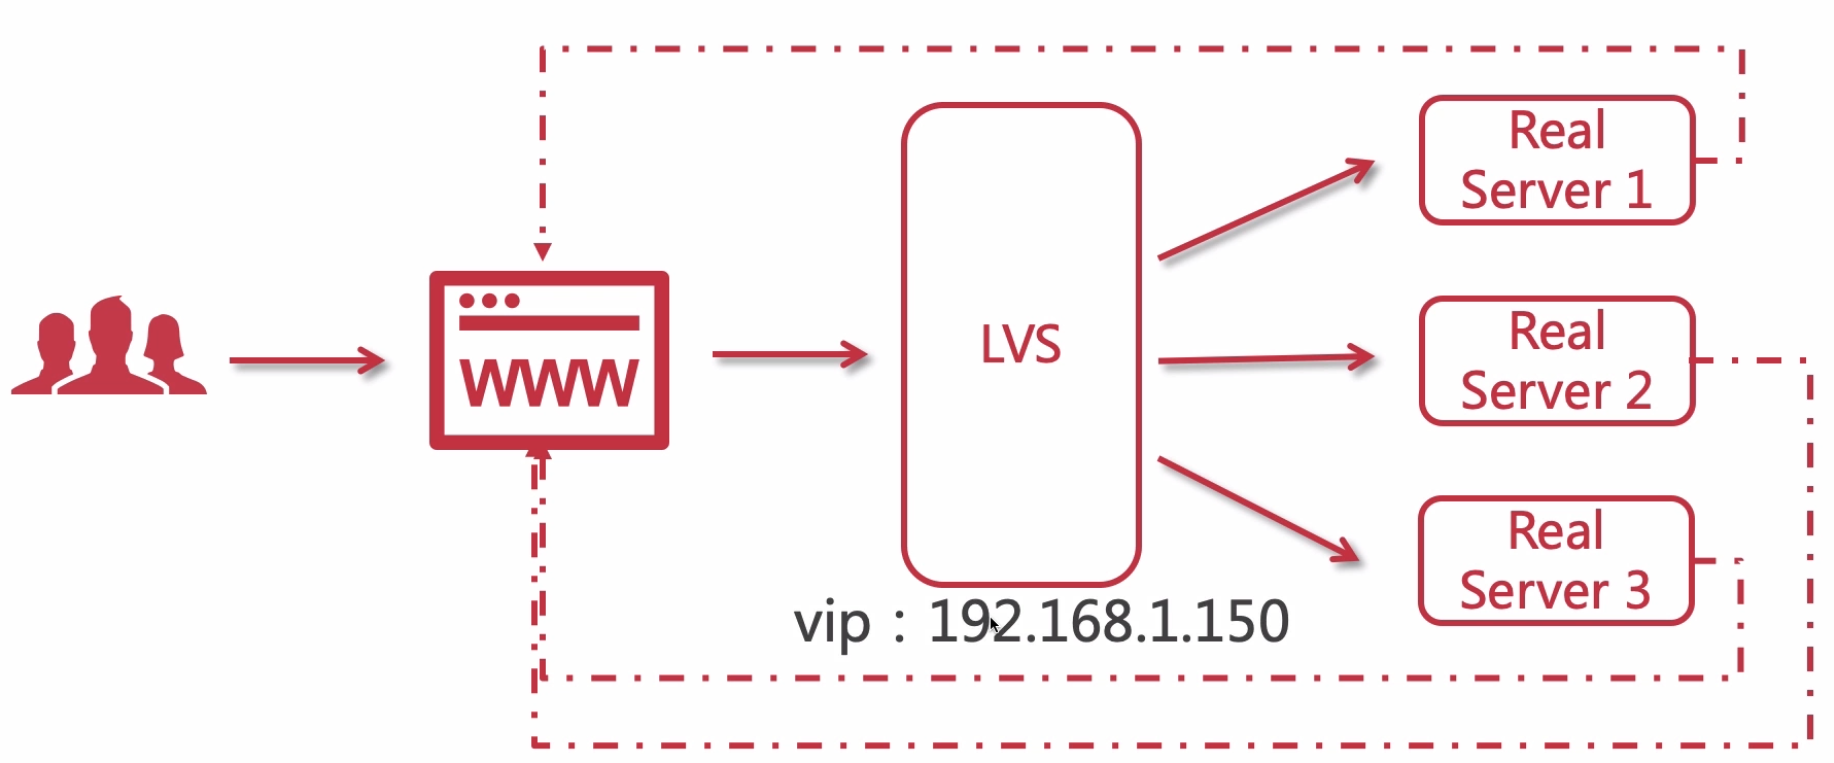 26-LVS 三种模式_服务器_02